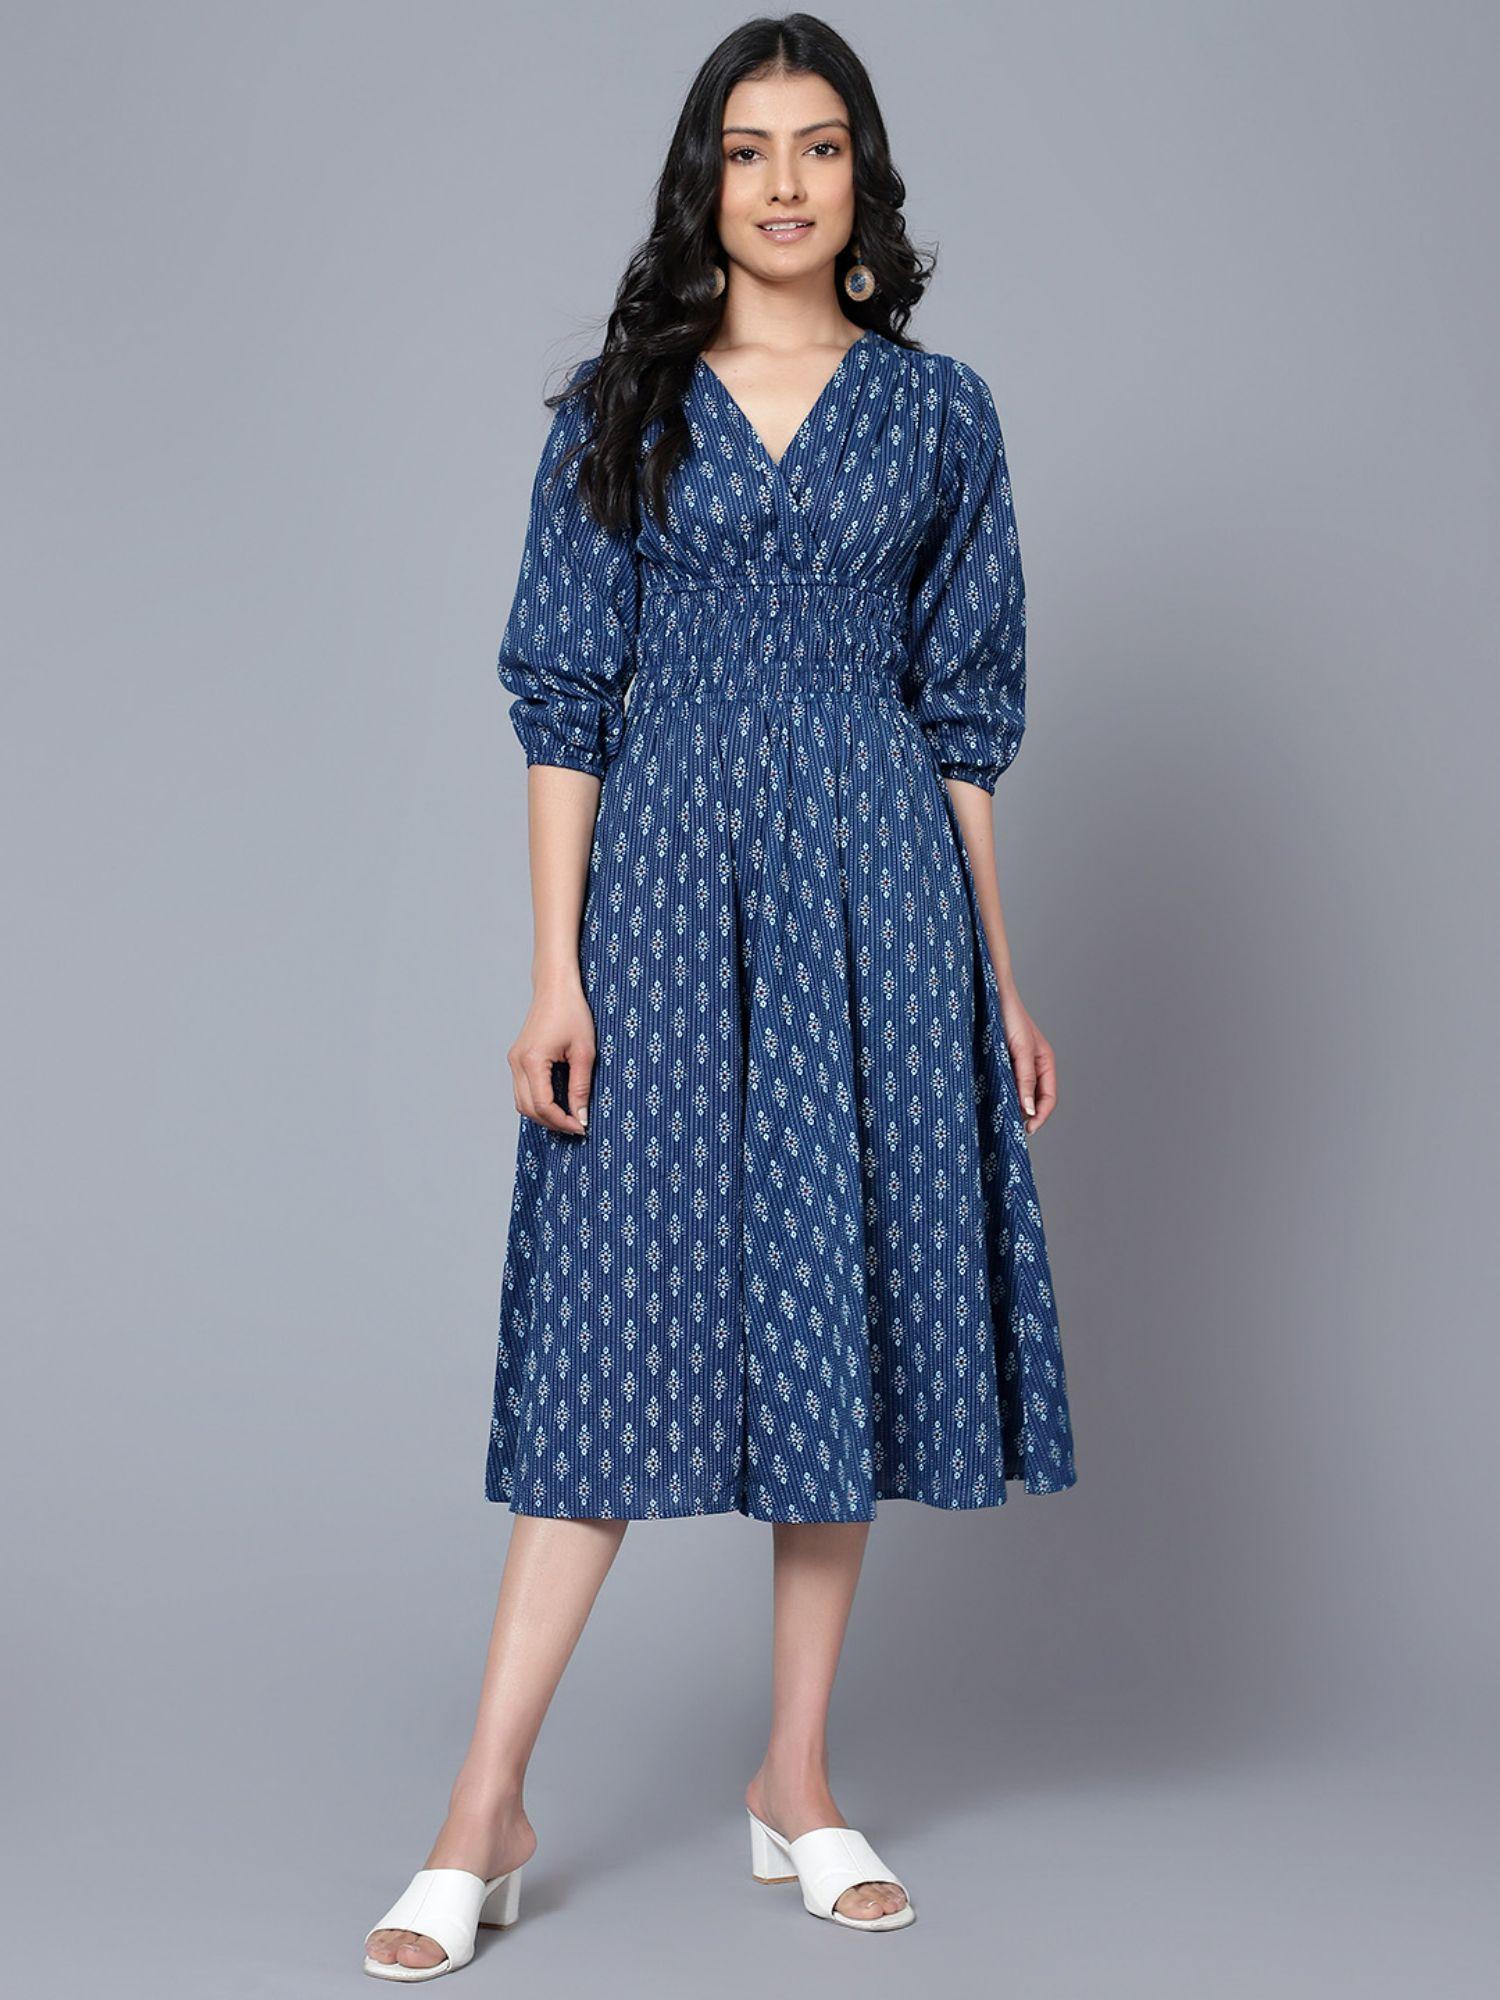 printed navy blue midi dress